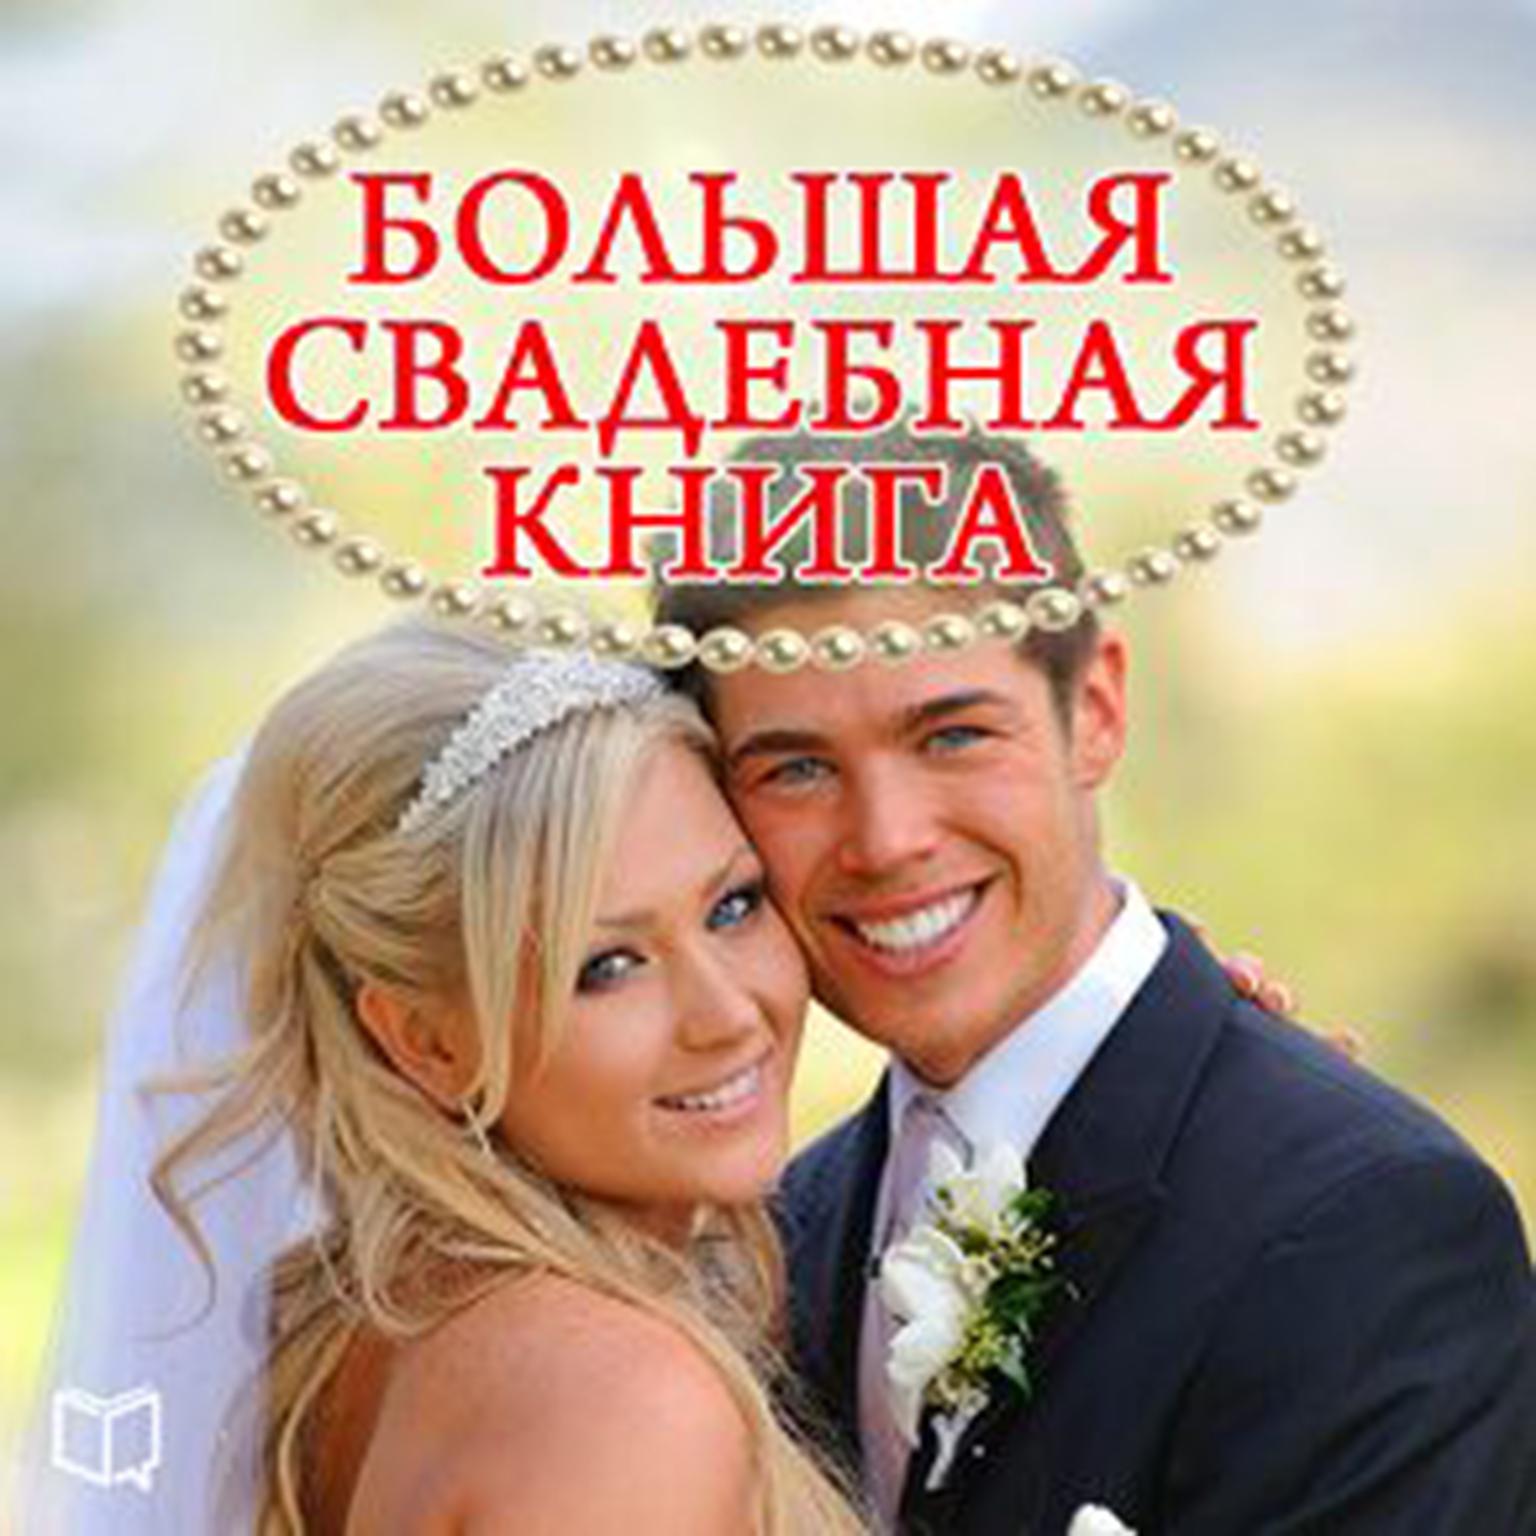 The Great Wedding Book [Russian Edition] Audiobook, by Natalia Pirogova